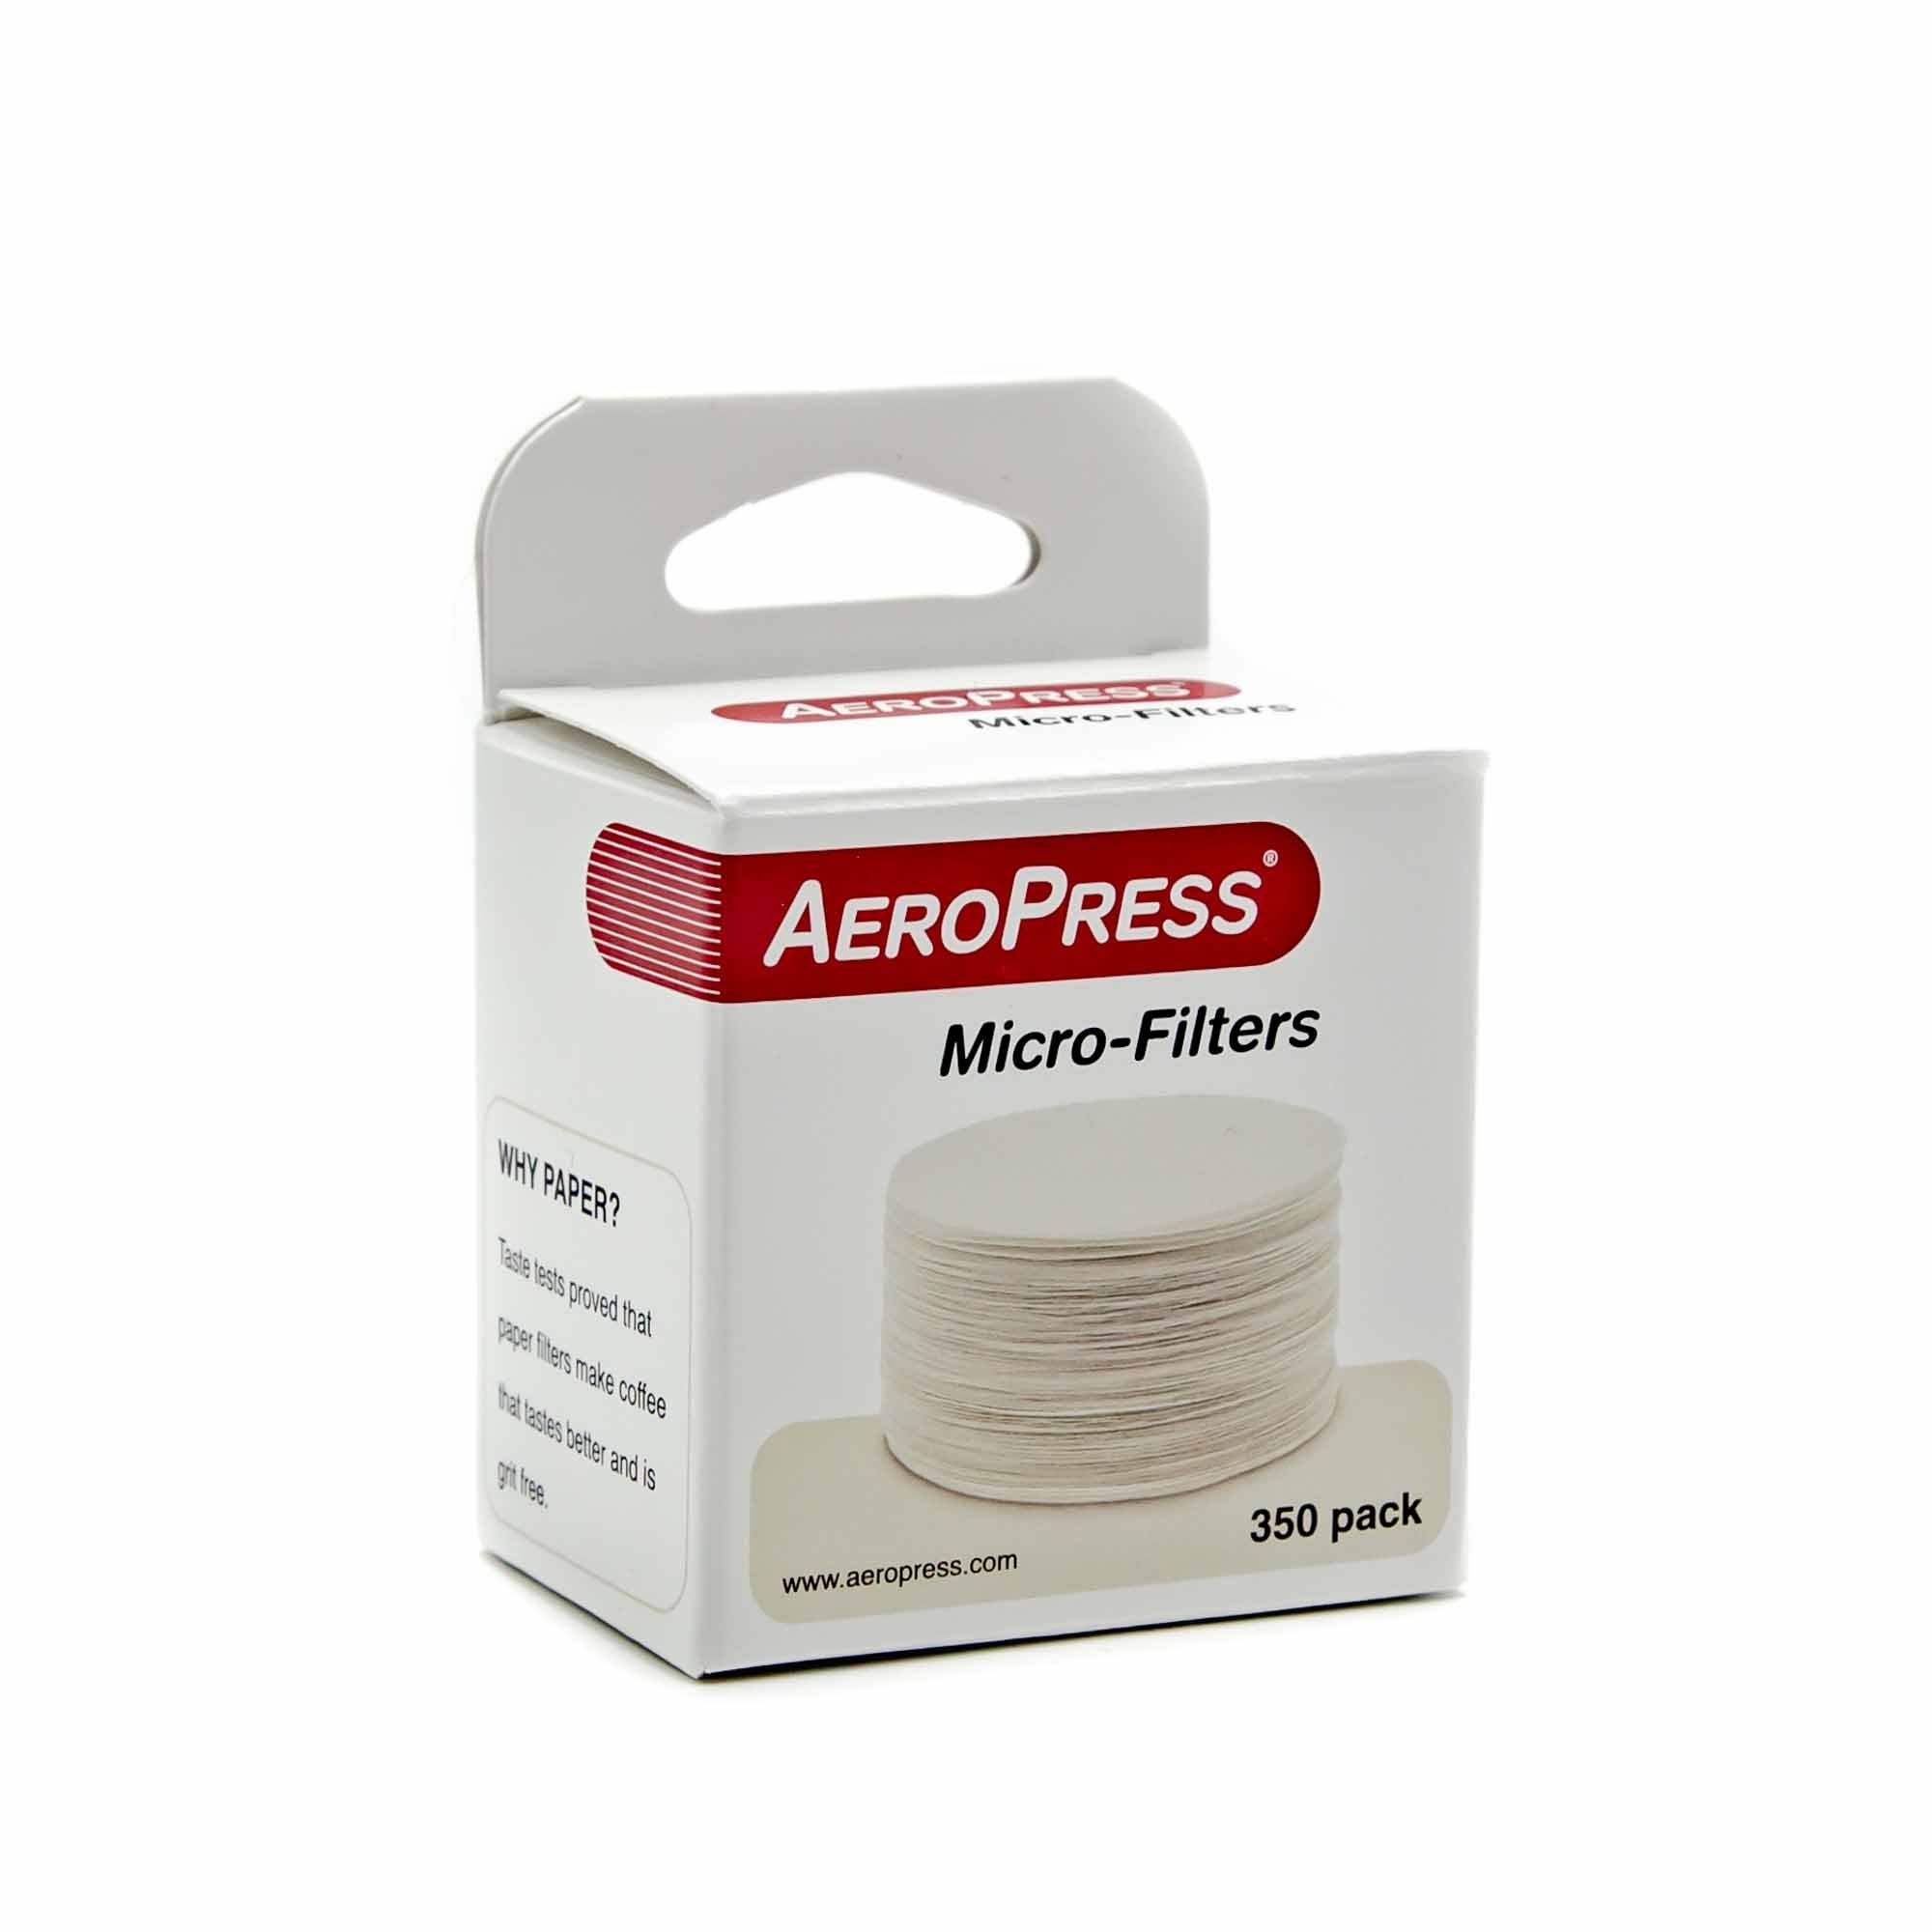 AeroPress Micro-Filters - Mortise And Tenon